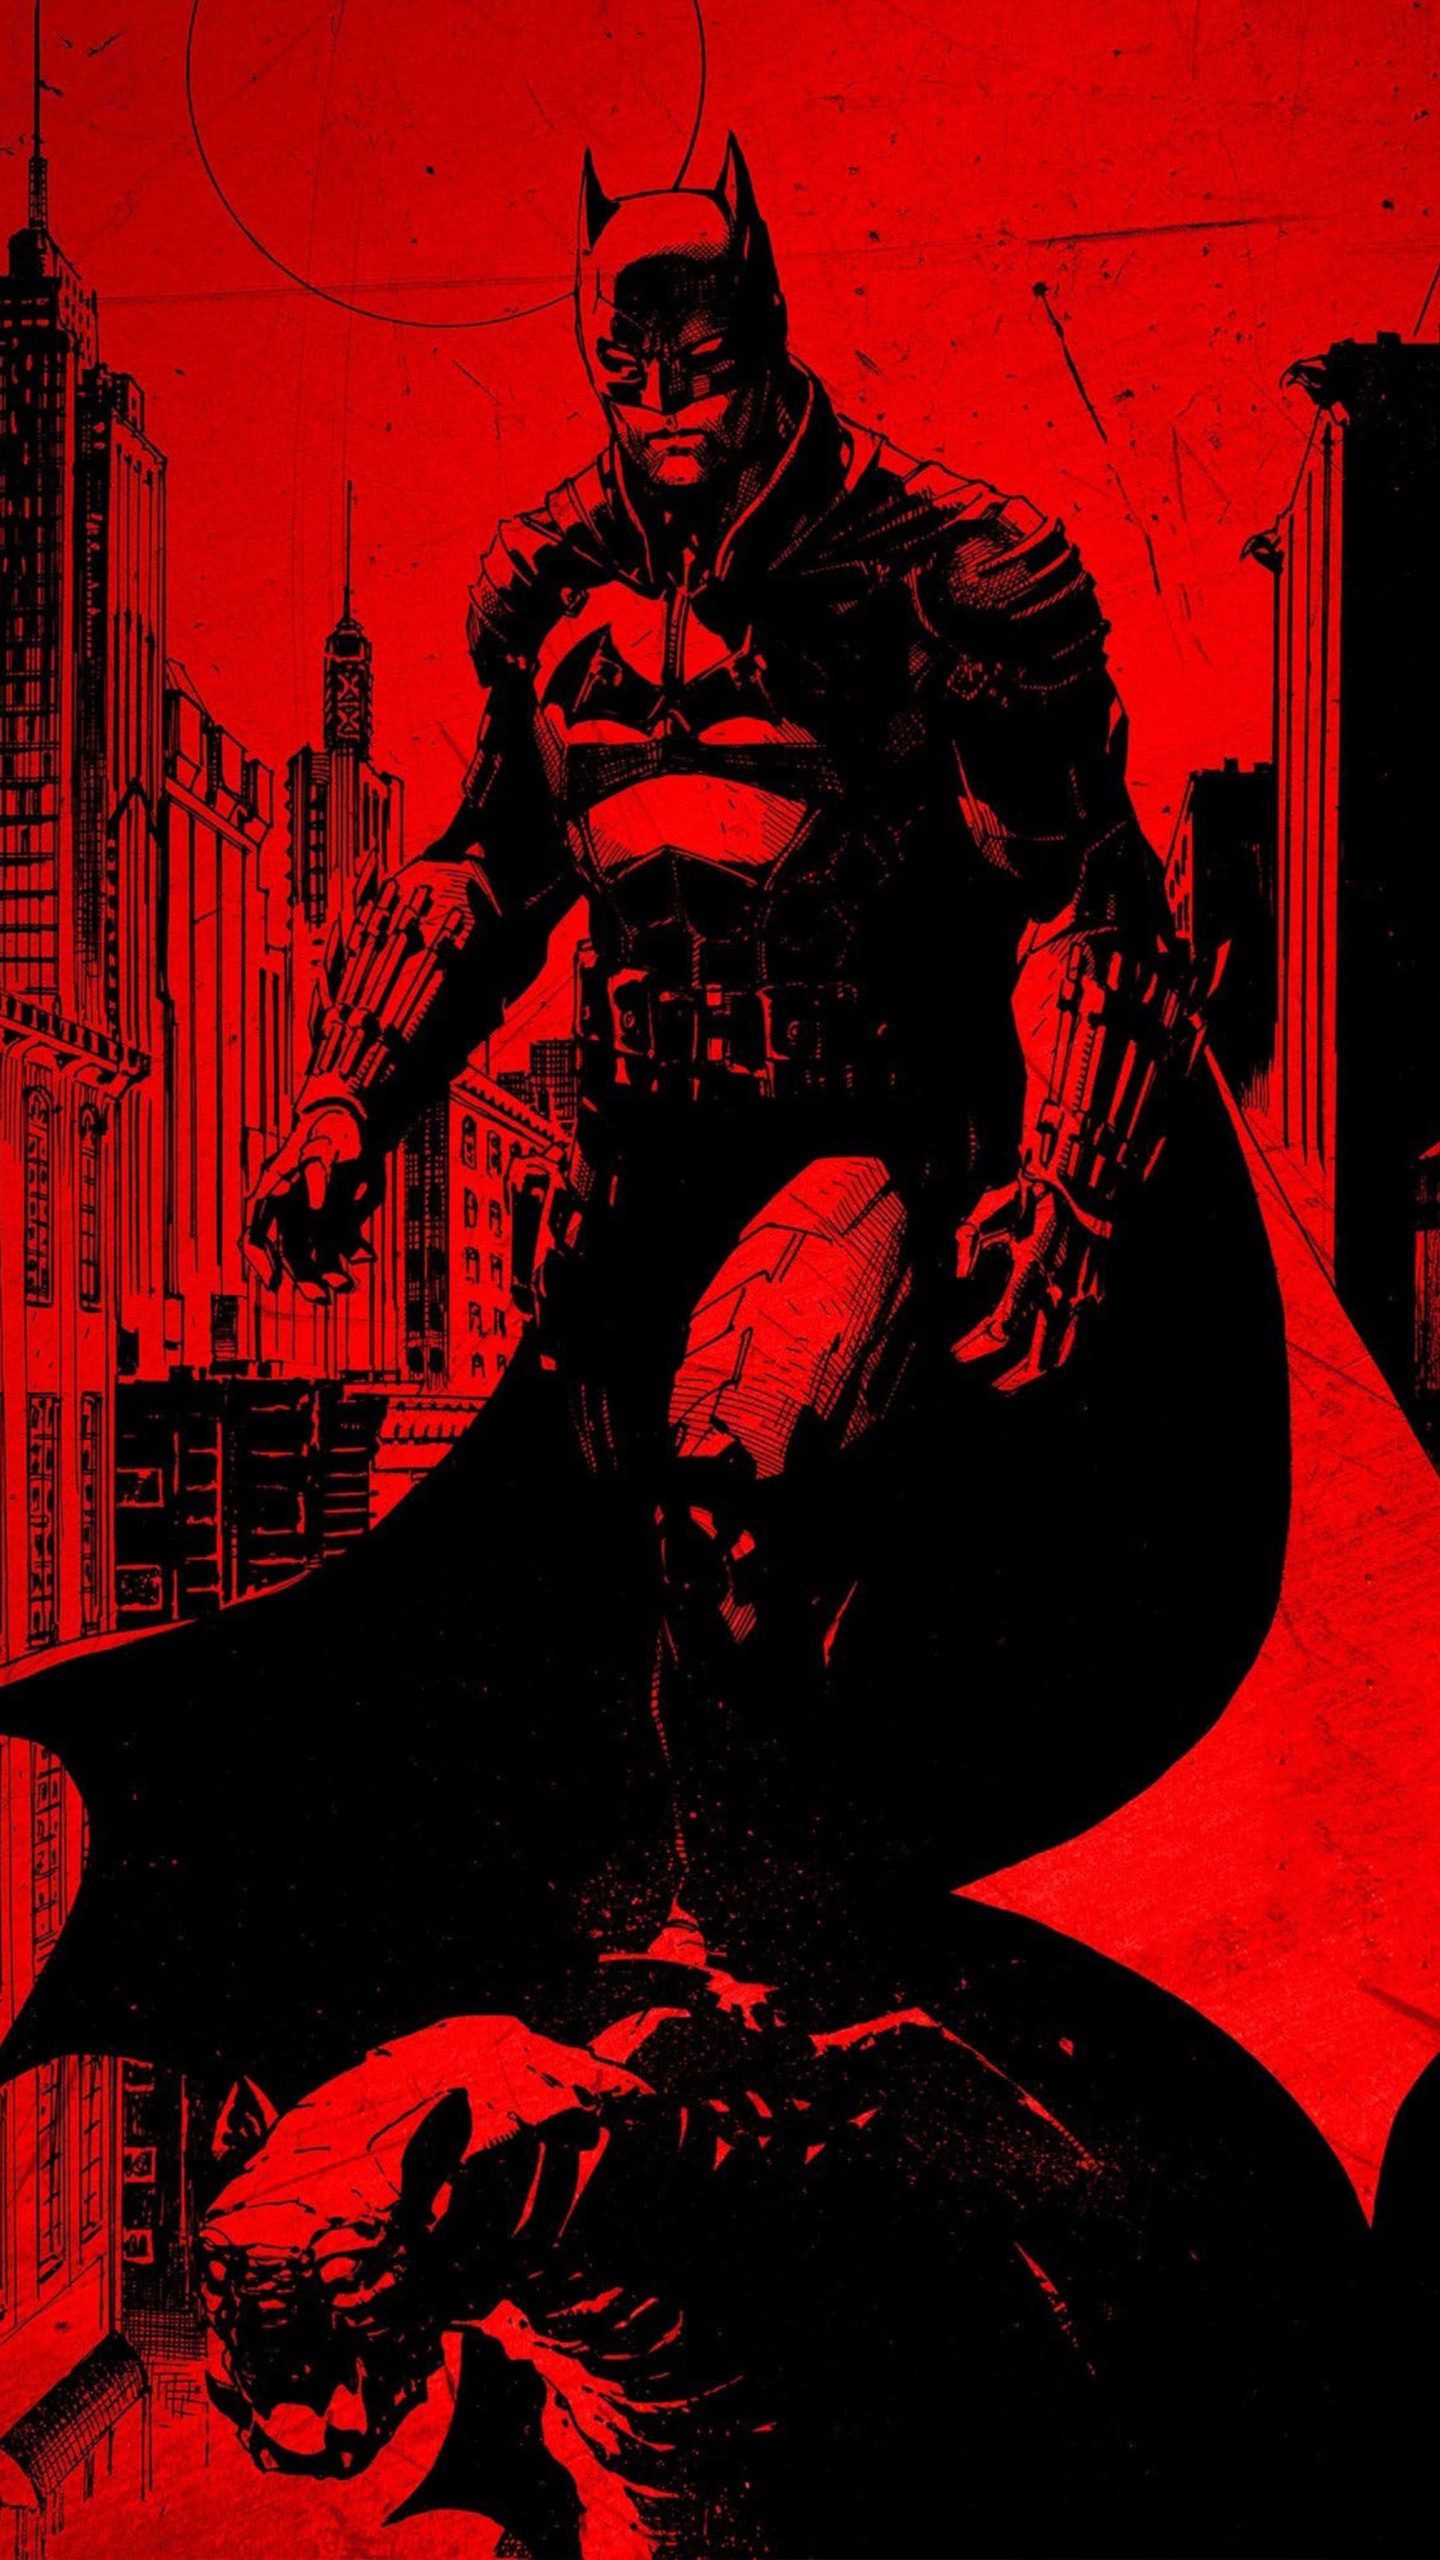 Batman 2021 Movie Poster 4K Ultra HD Mobile Wallpaper. Batman wallpaper, Batman artwork, Batman